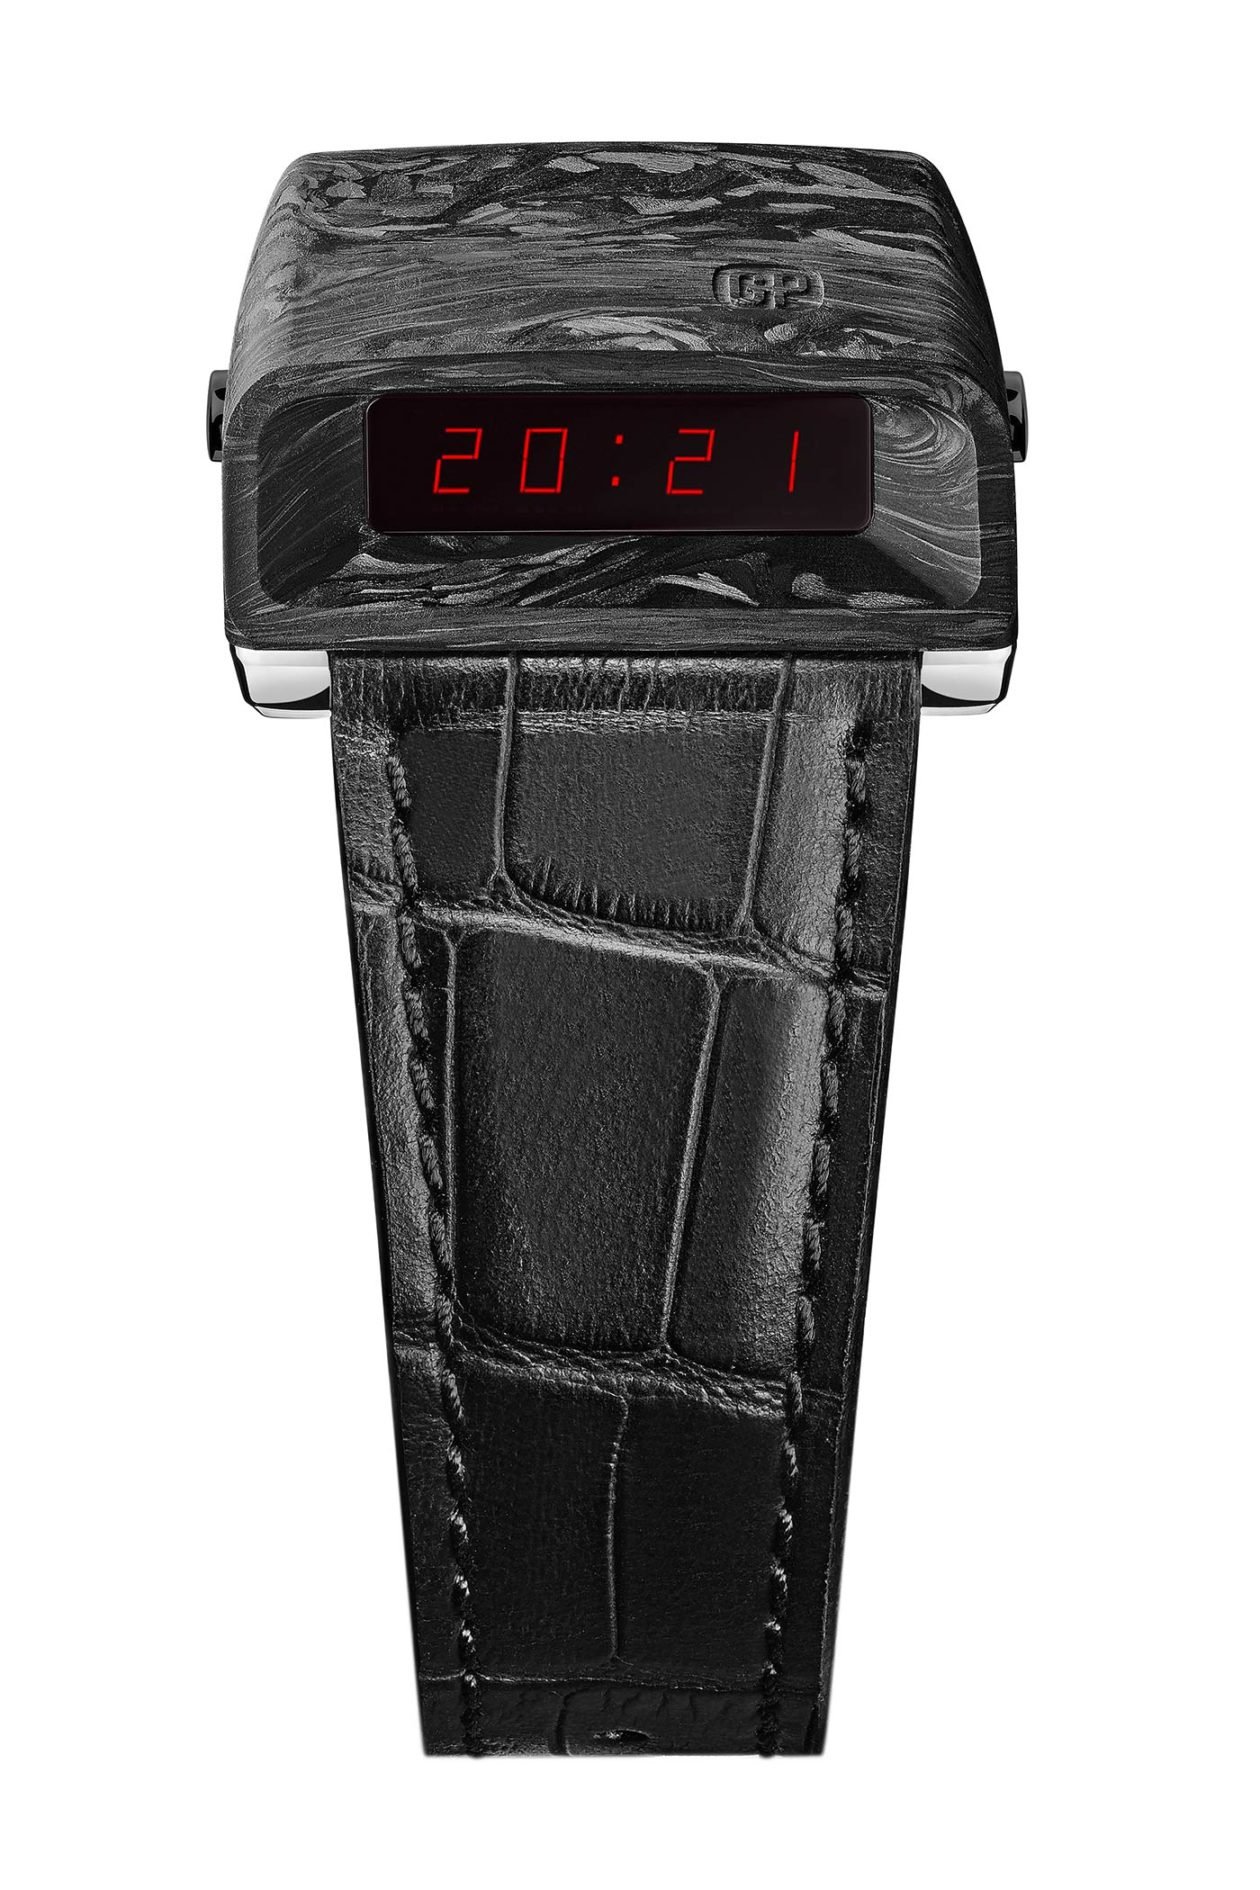 Girard-Perregaux x Bamford Watch Department Casquette Only Watch 2021